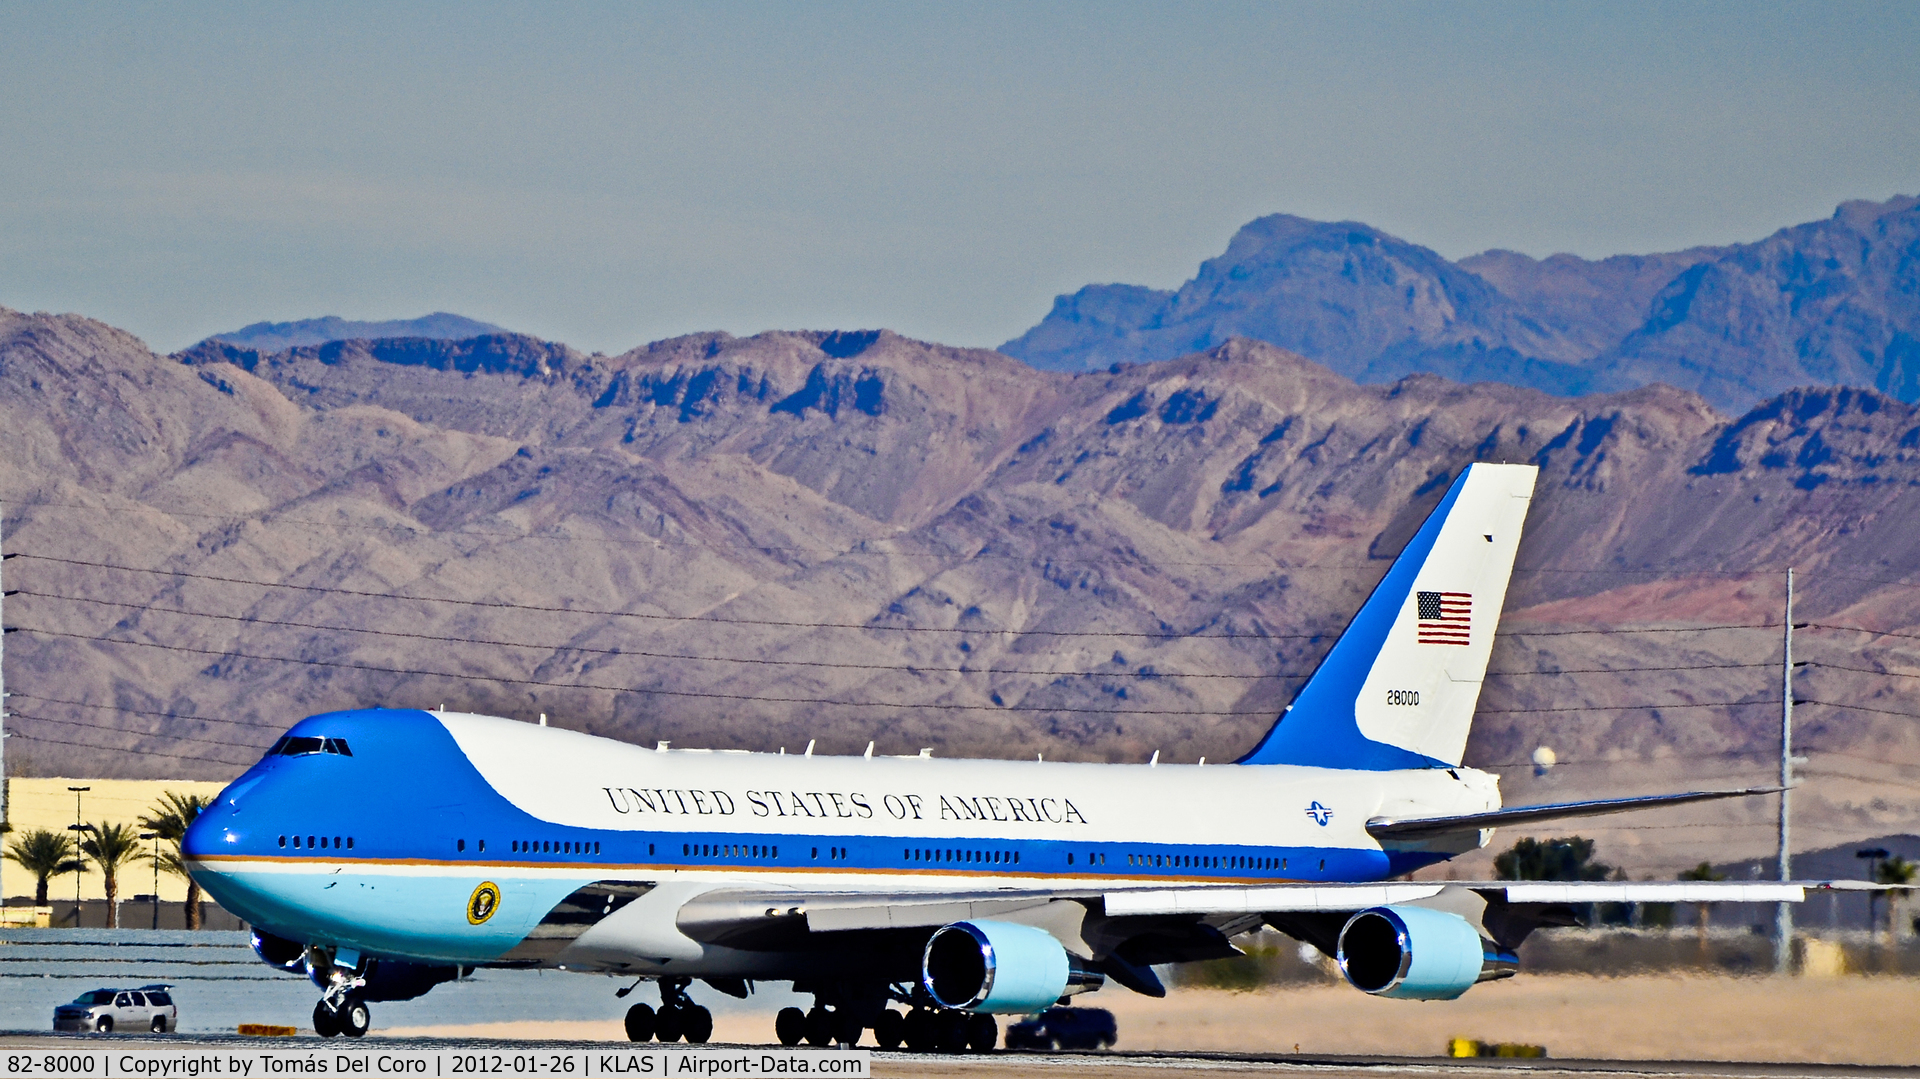 82-8000, 1987 Boeing VC-25A (747-2G4B) C/N 23824, 82-8000 U.S.A.F. 1988 Boeing VC-25A C/N 23824
President Obama - Las Vegas , Nevada

- Las Vegas - McCarran International (LAS / KLAS)
USA - Nevada, January 26, 2012
Photo: Tomás Del Coro